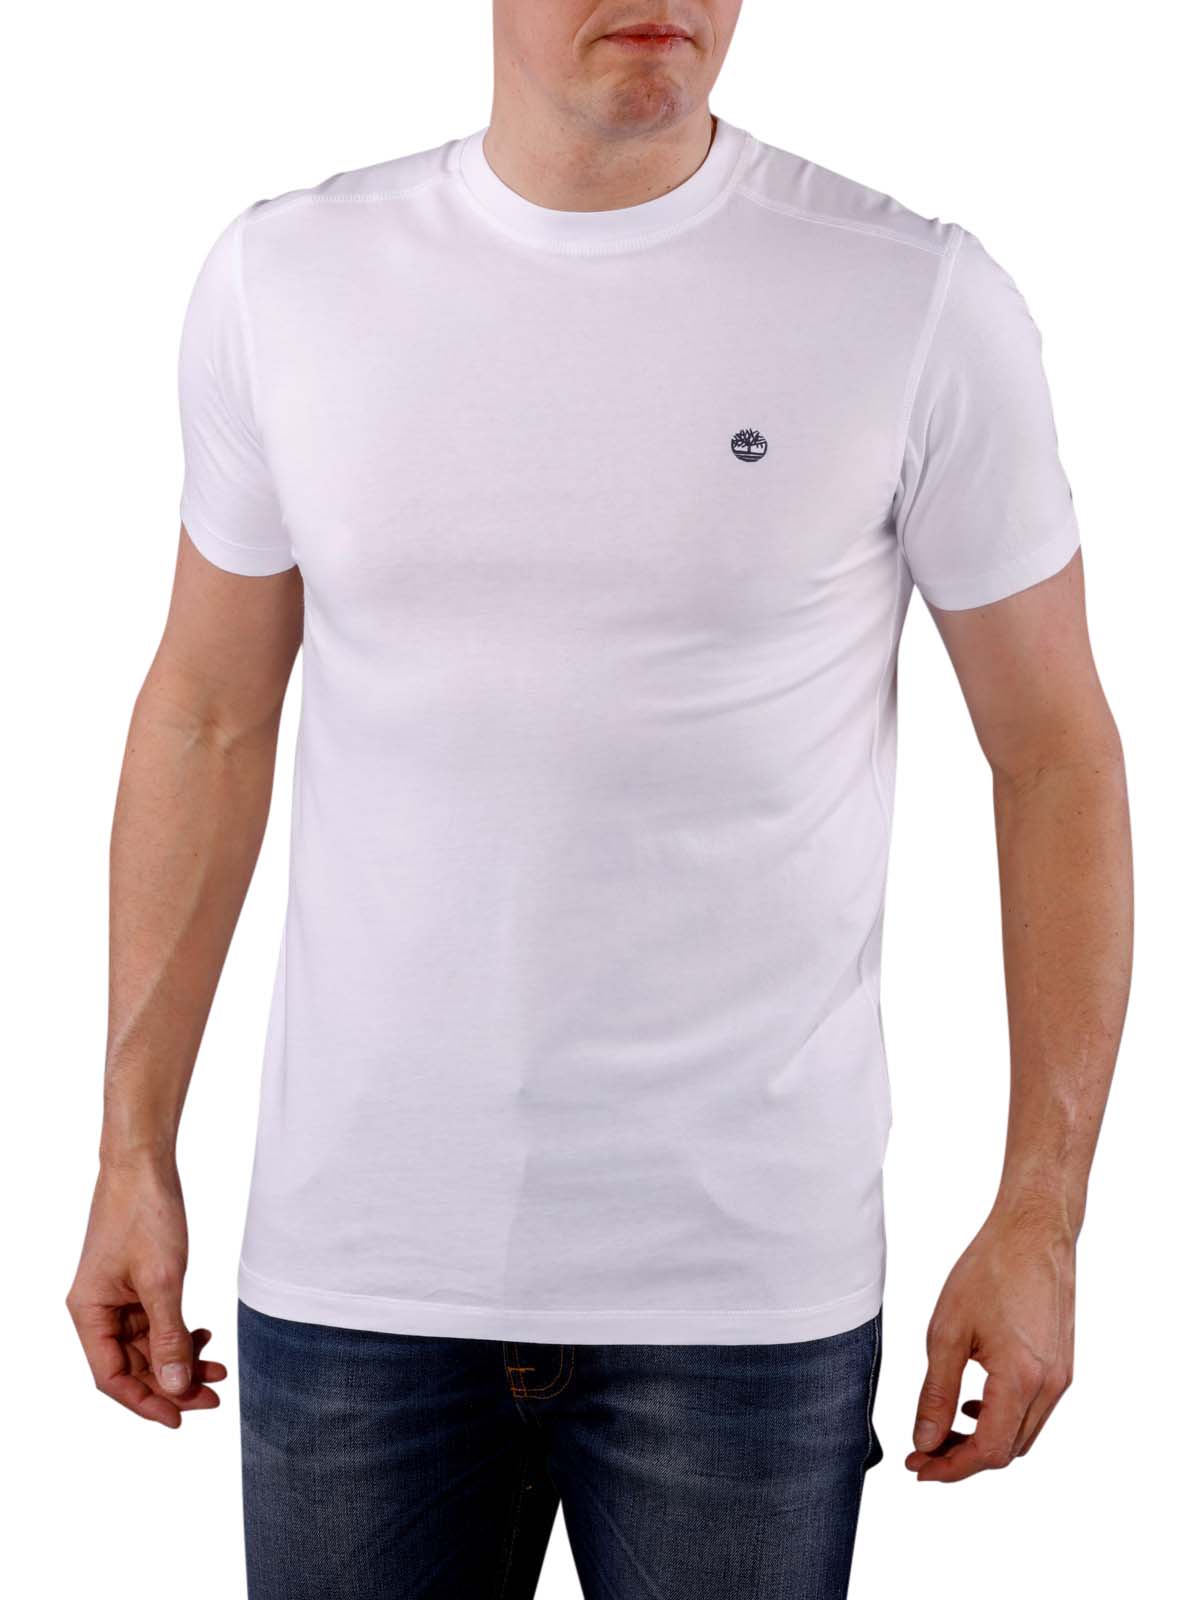 Timberland Dunstan River T-Shirt white 